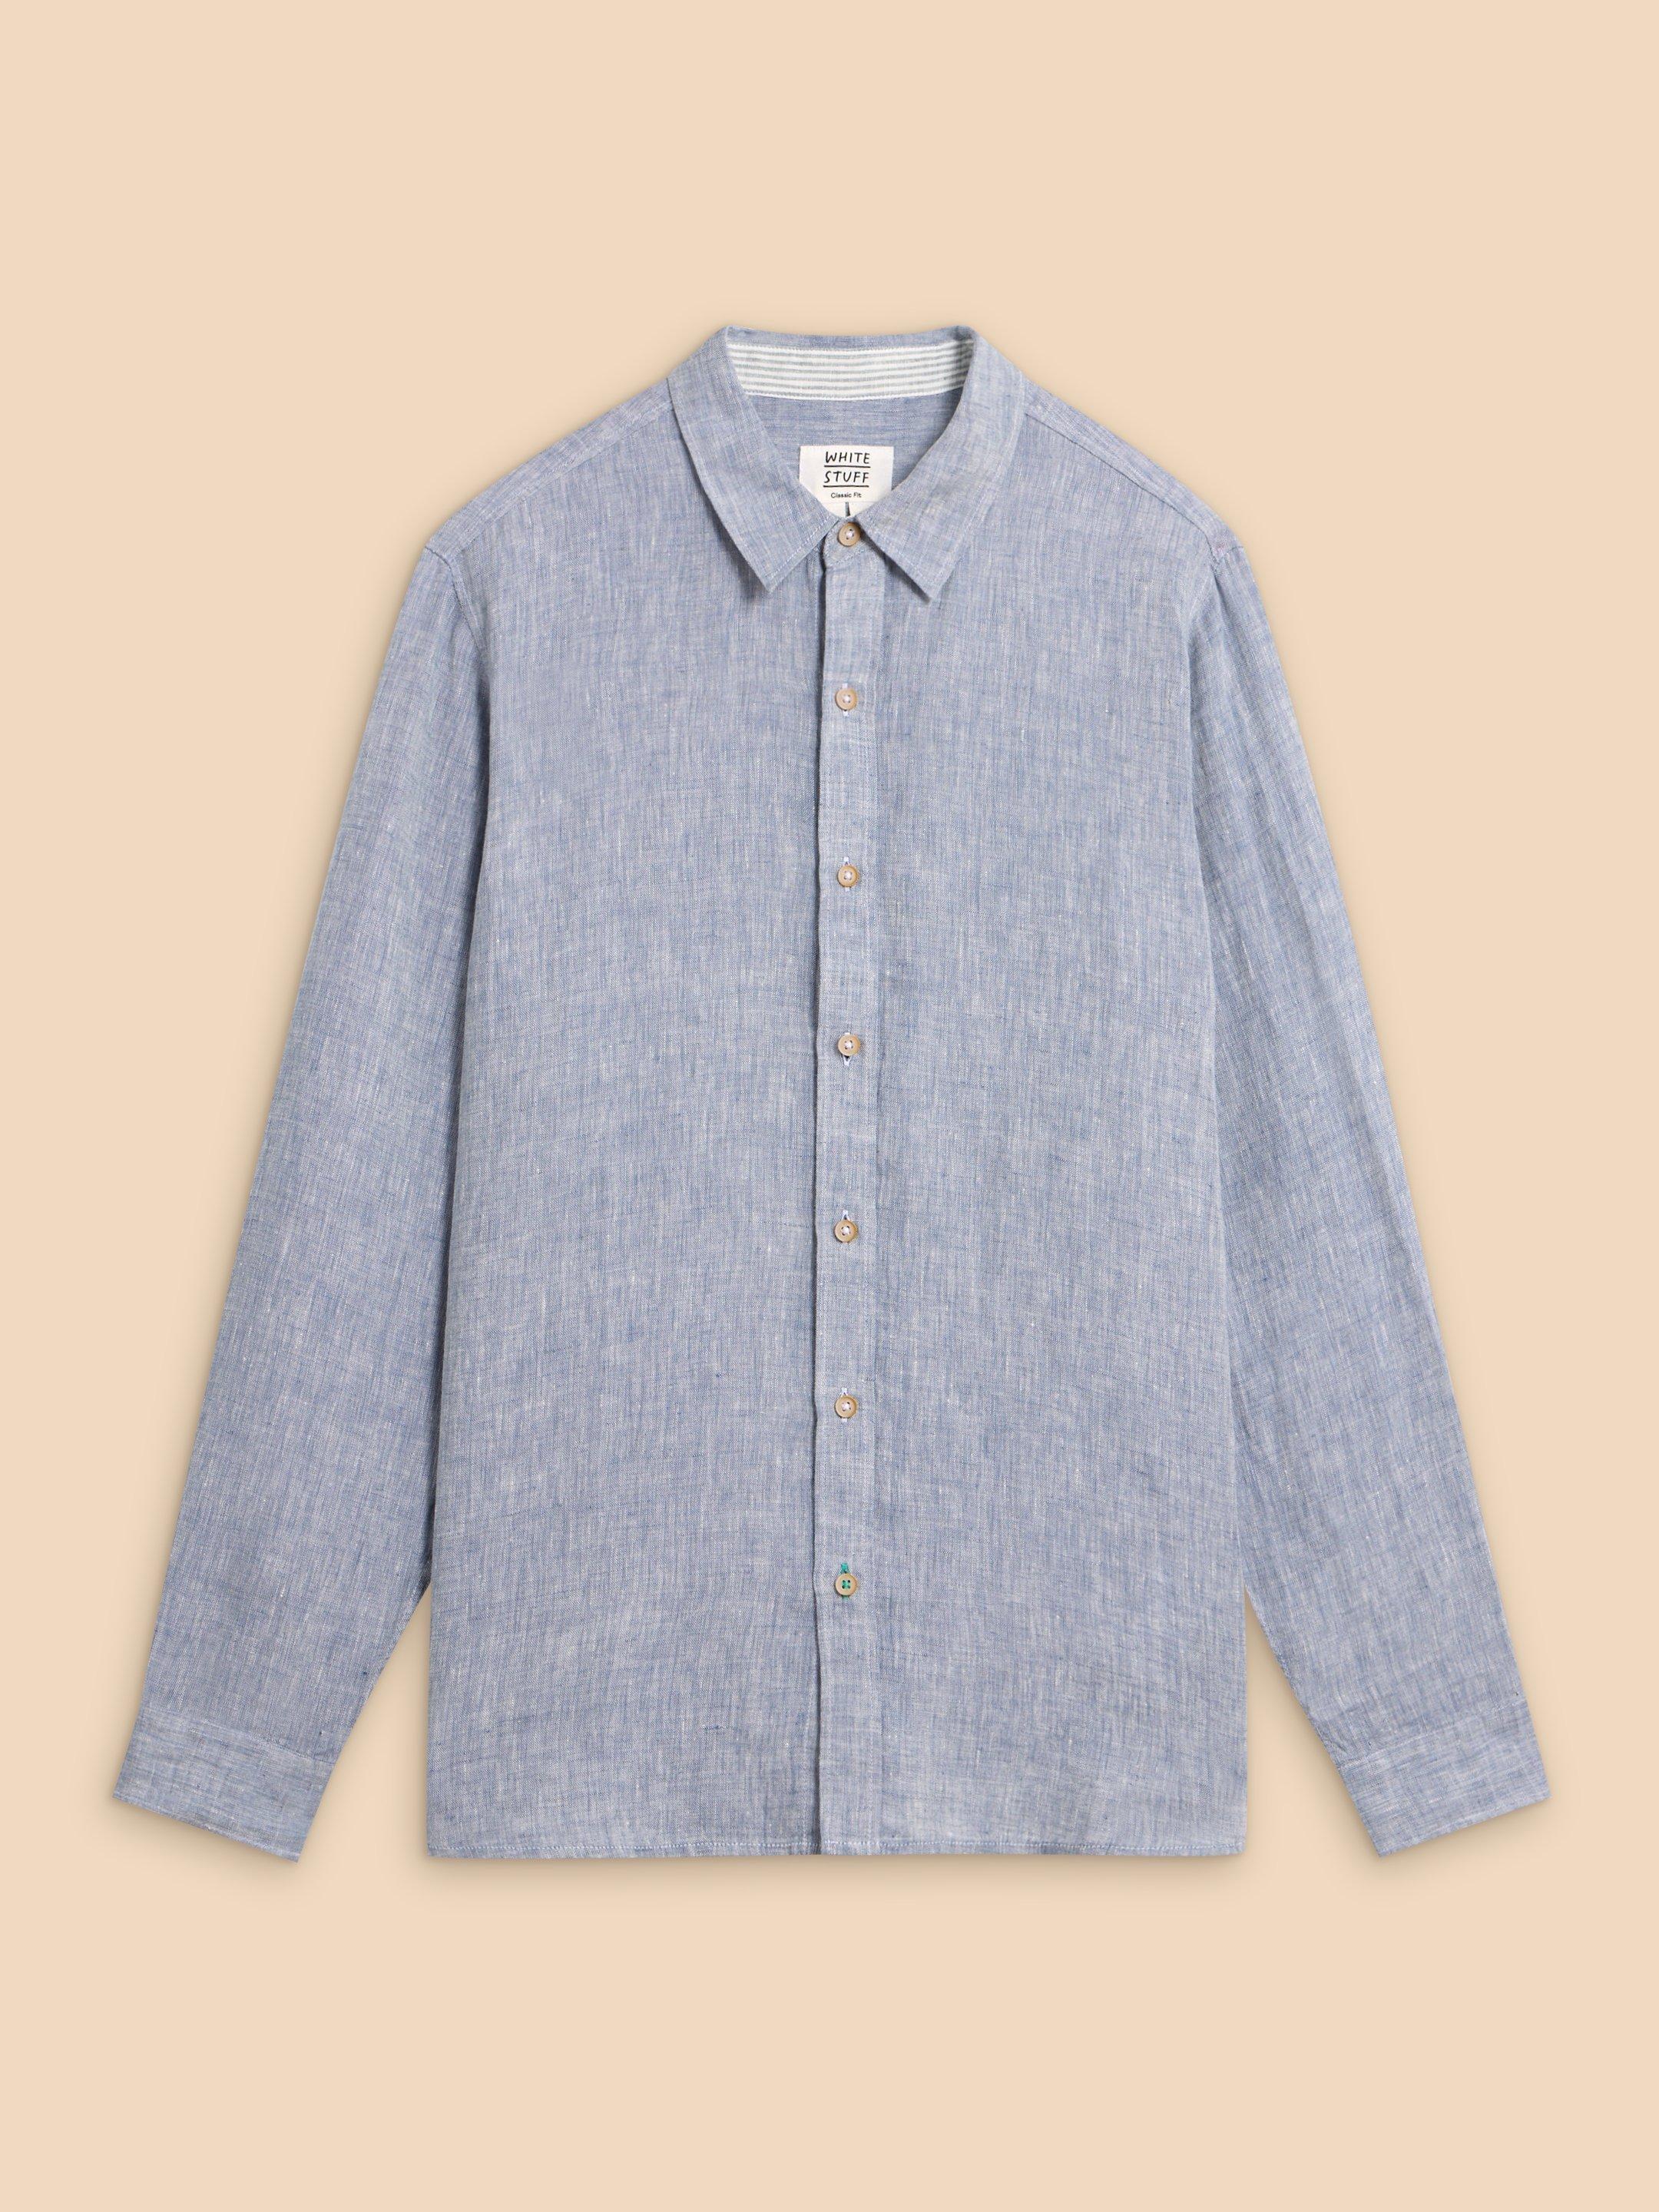 Pembroke LS Linen Shirt in CHAMB BLUE - FLAT FRONT